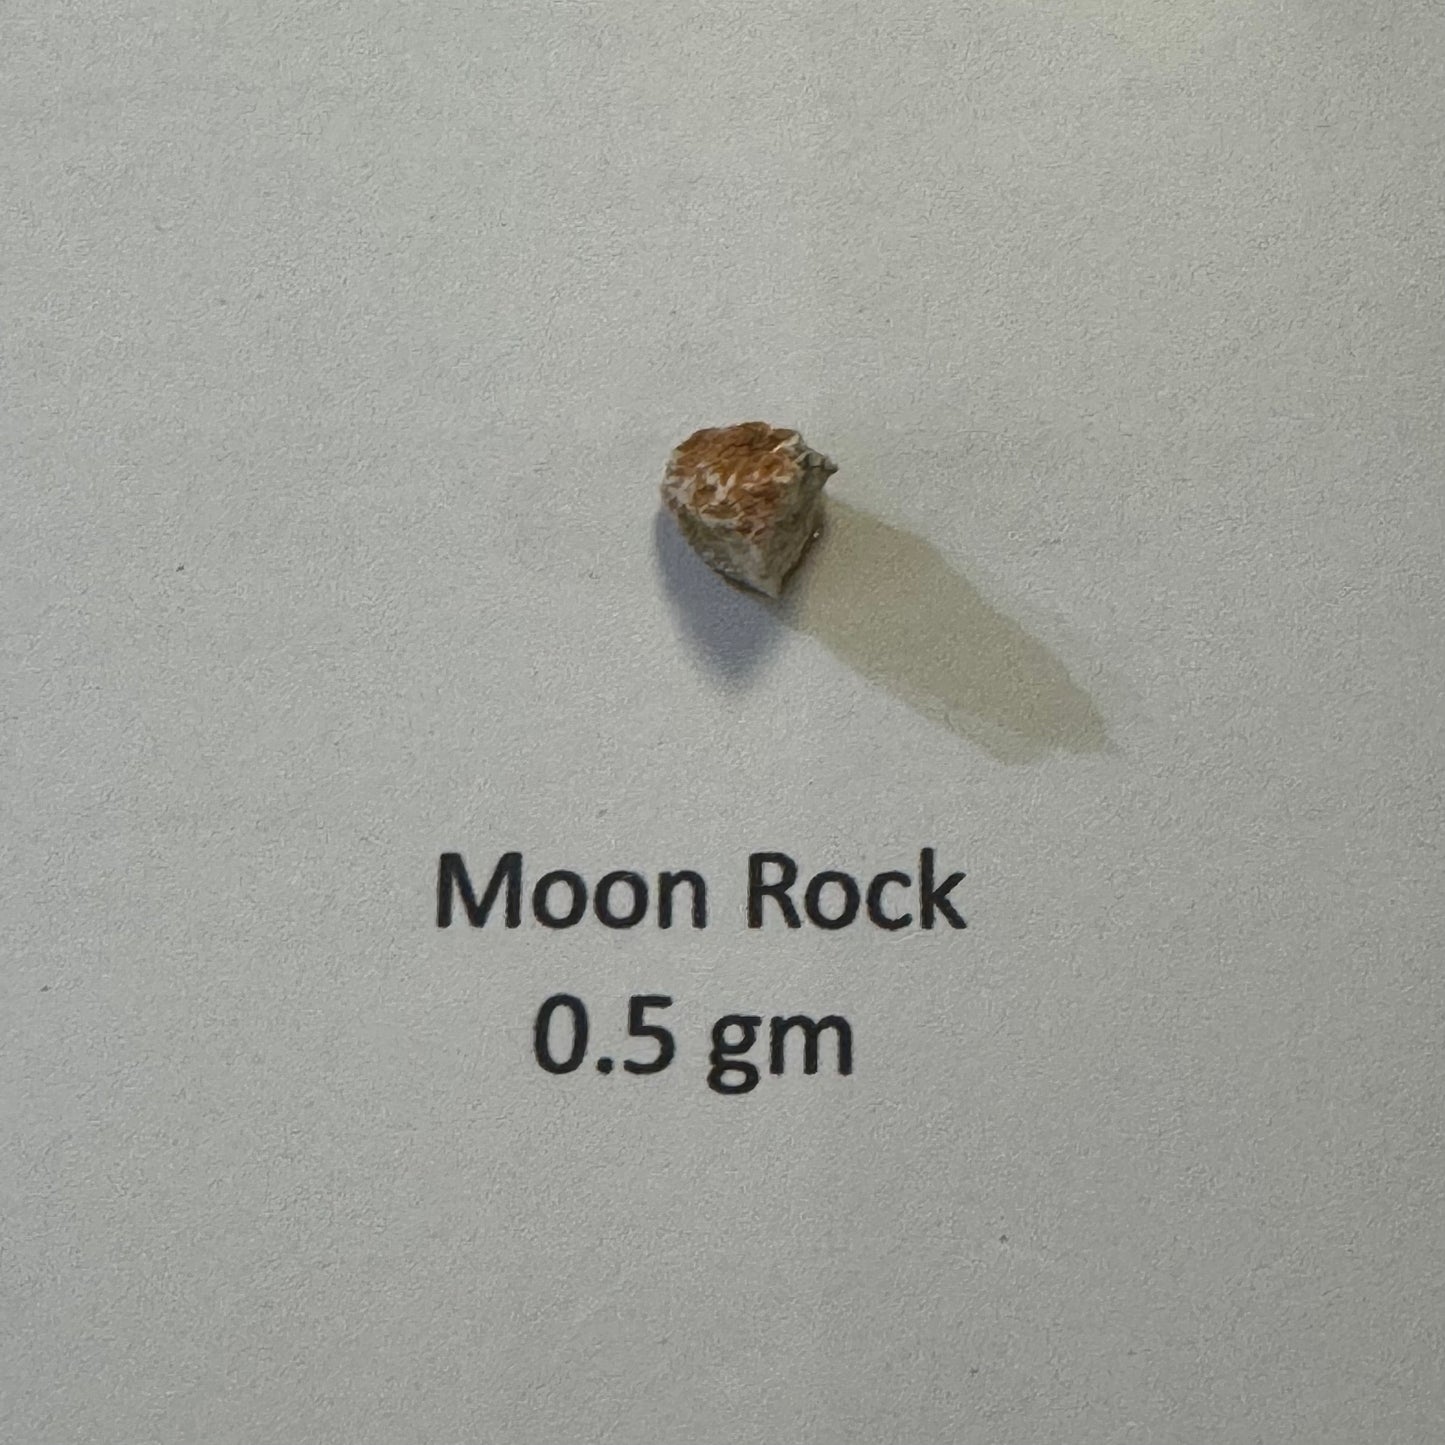 Moon rock